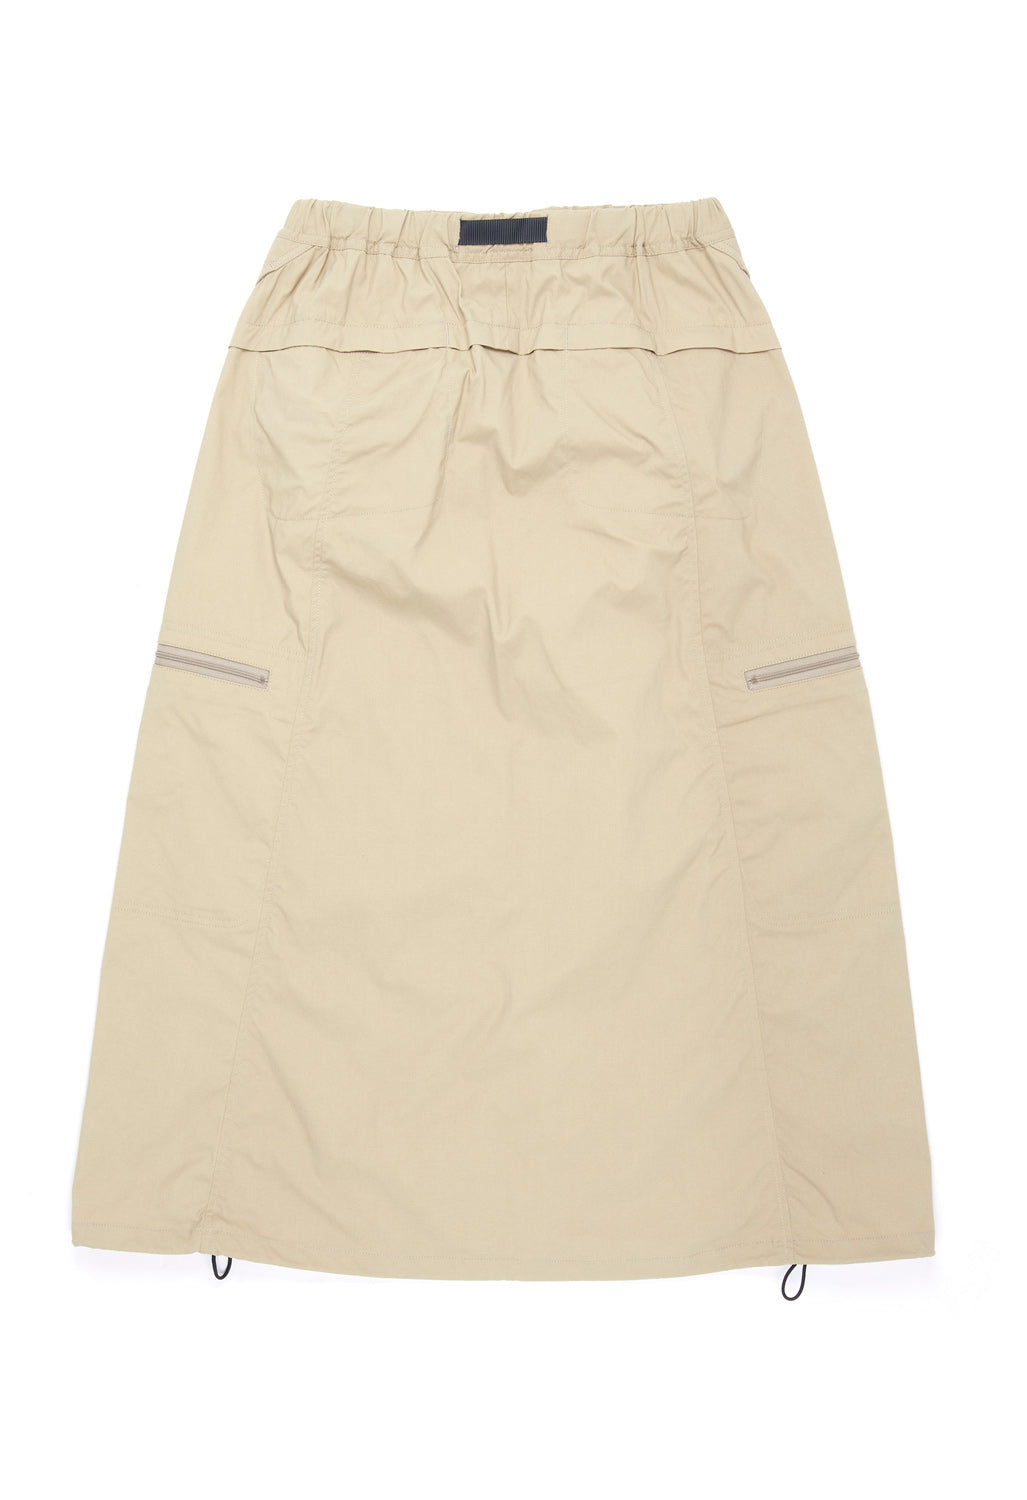 Gramicci Women's Softshell Nylon Skirt - Taupe